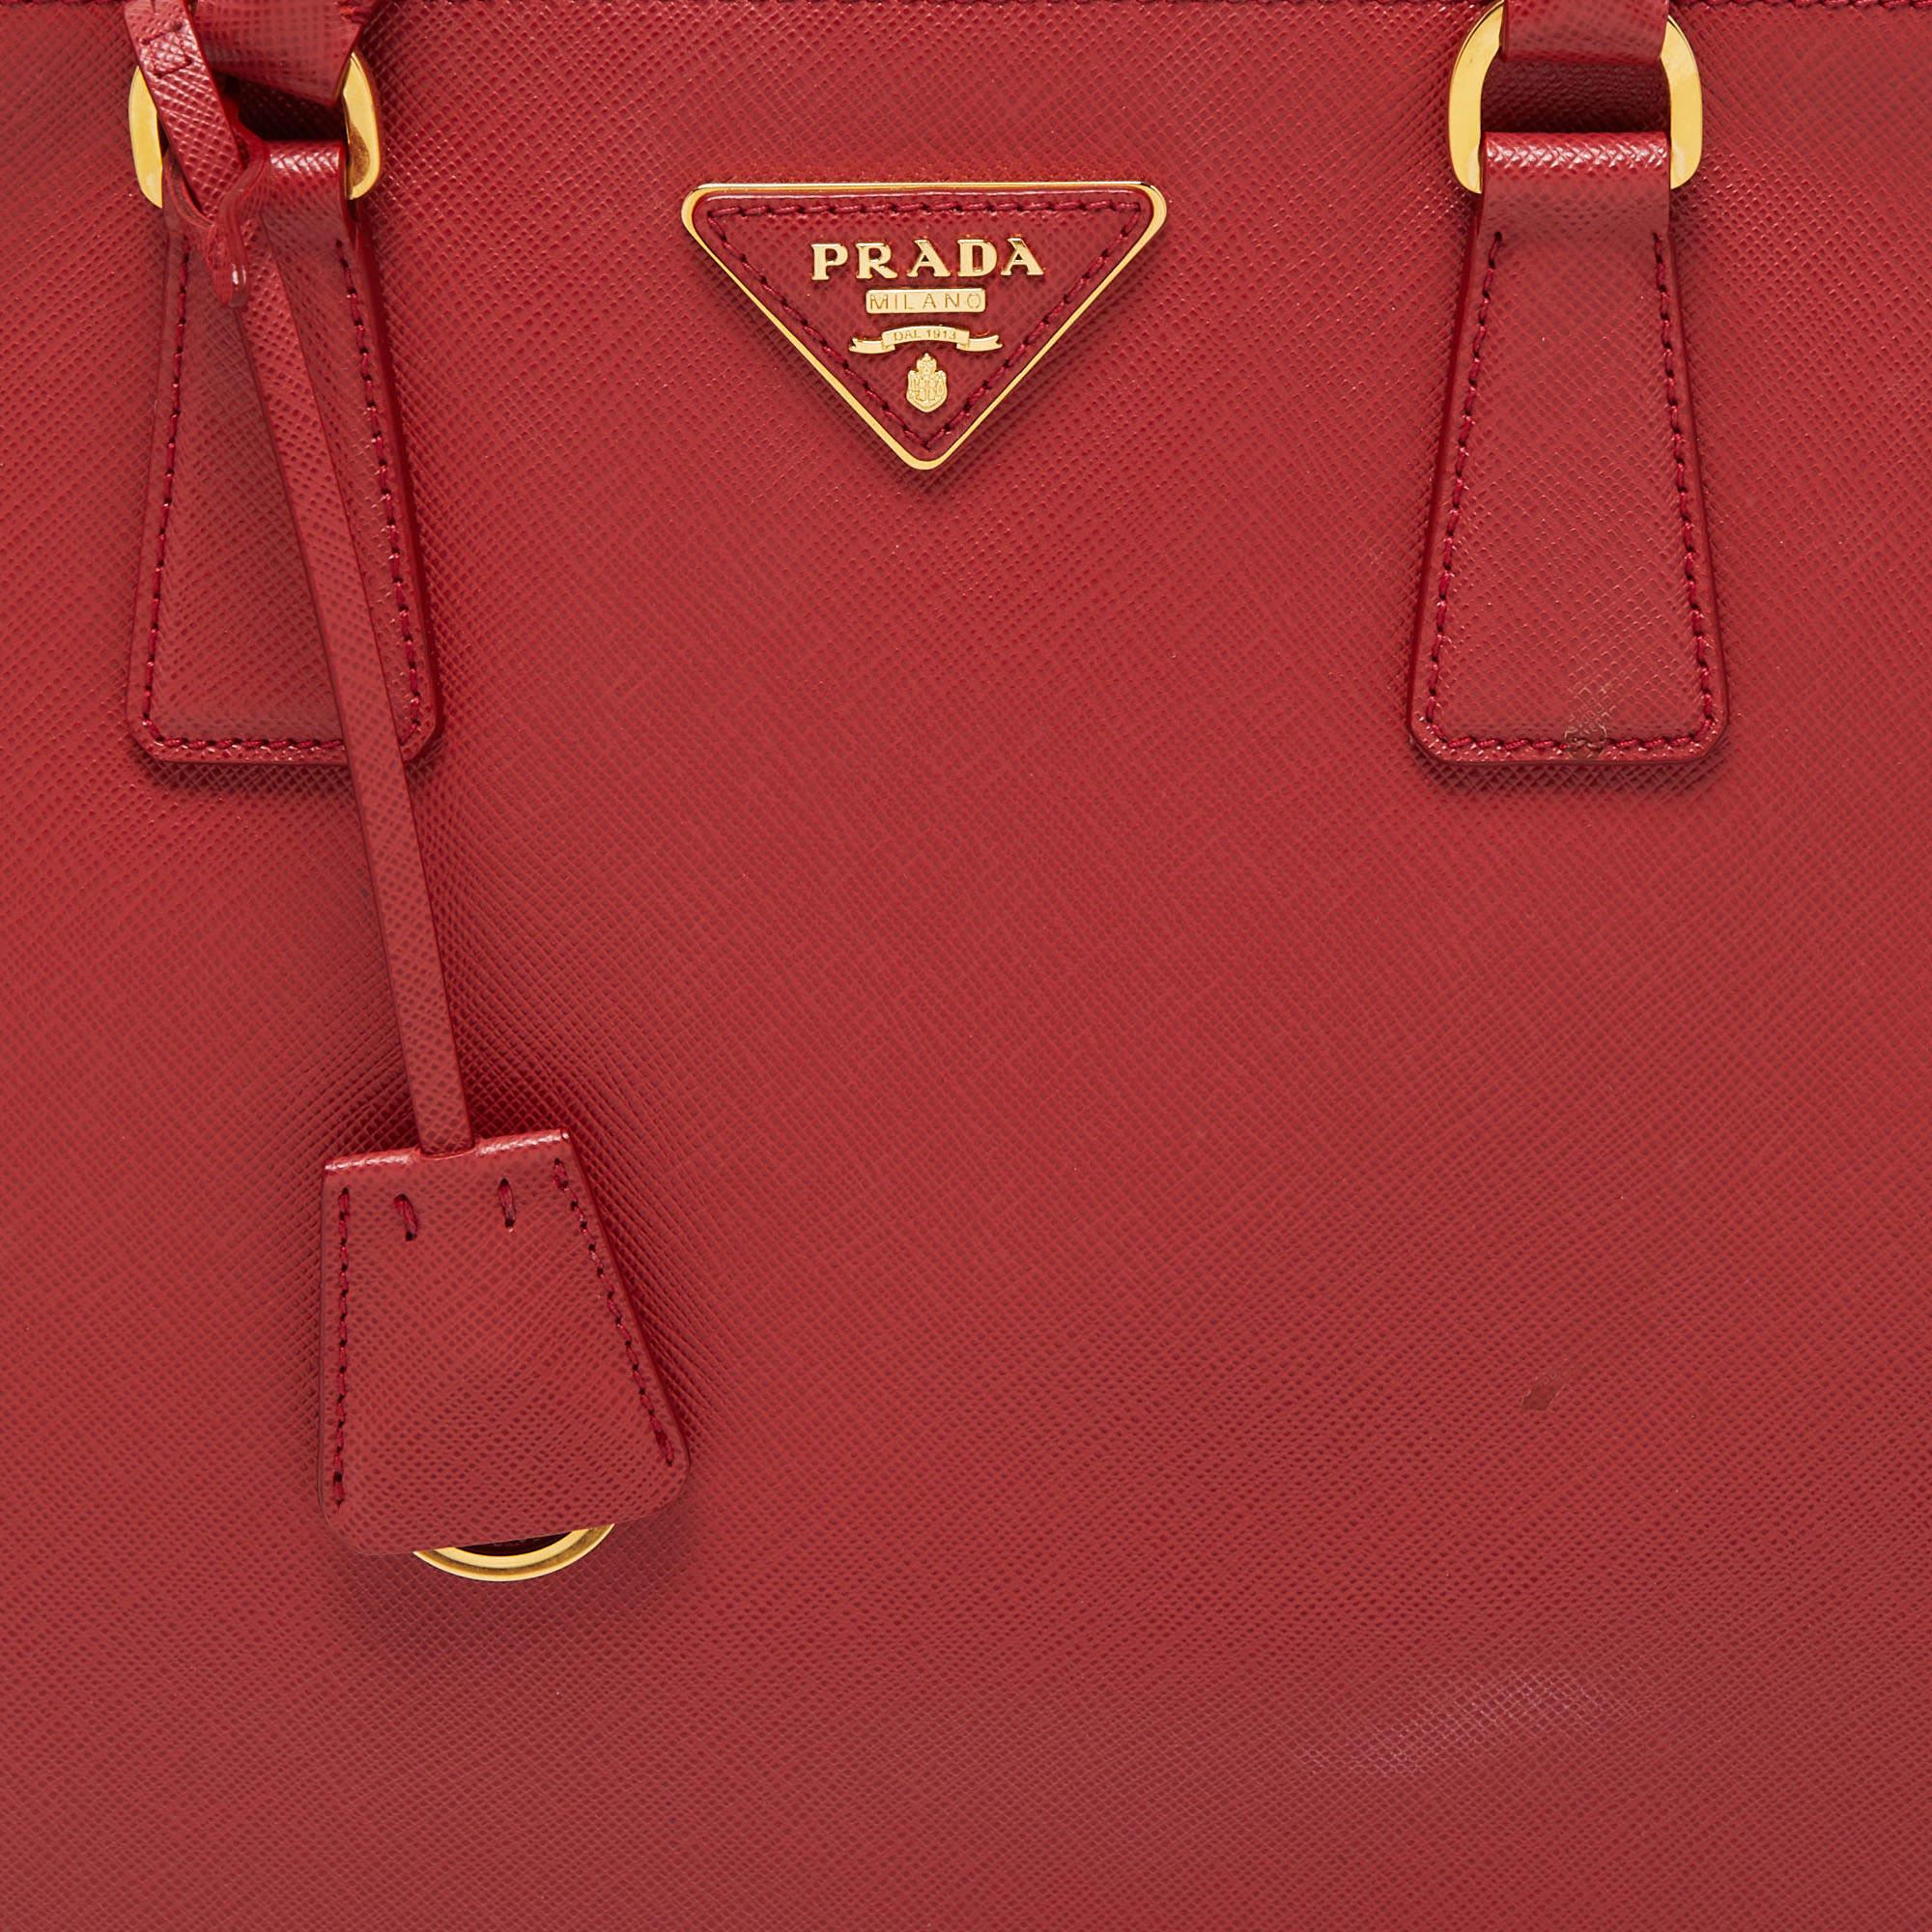 Prada Red Saffiano Leather Large Galleria Tote Bag 3